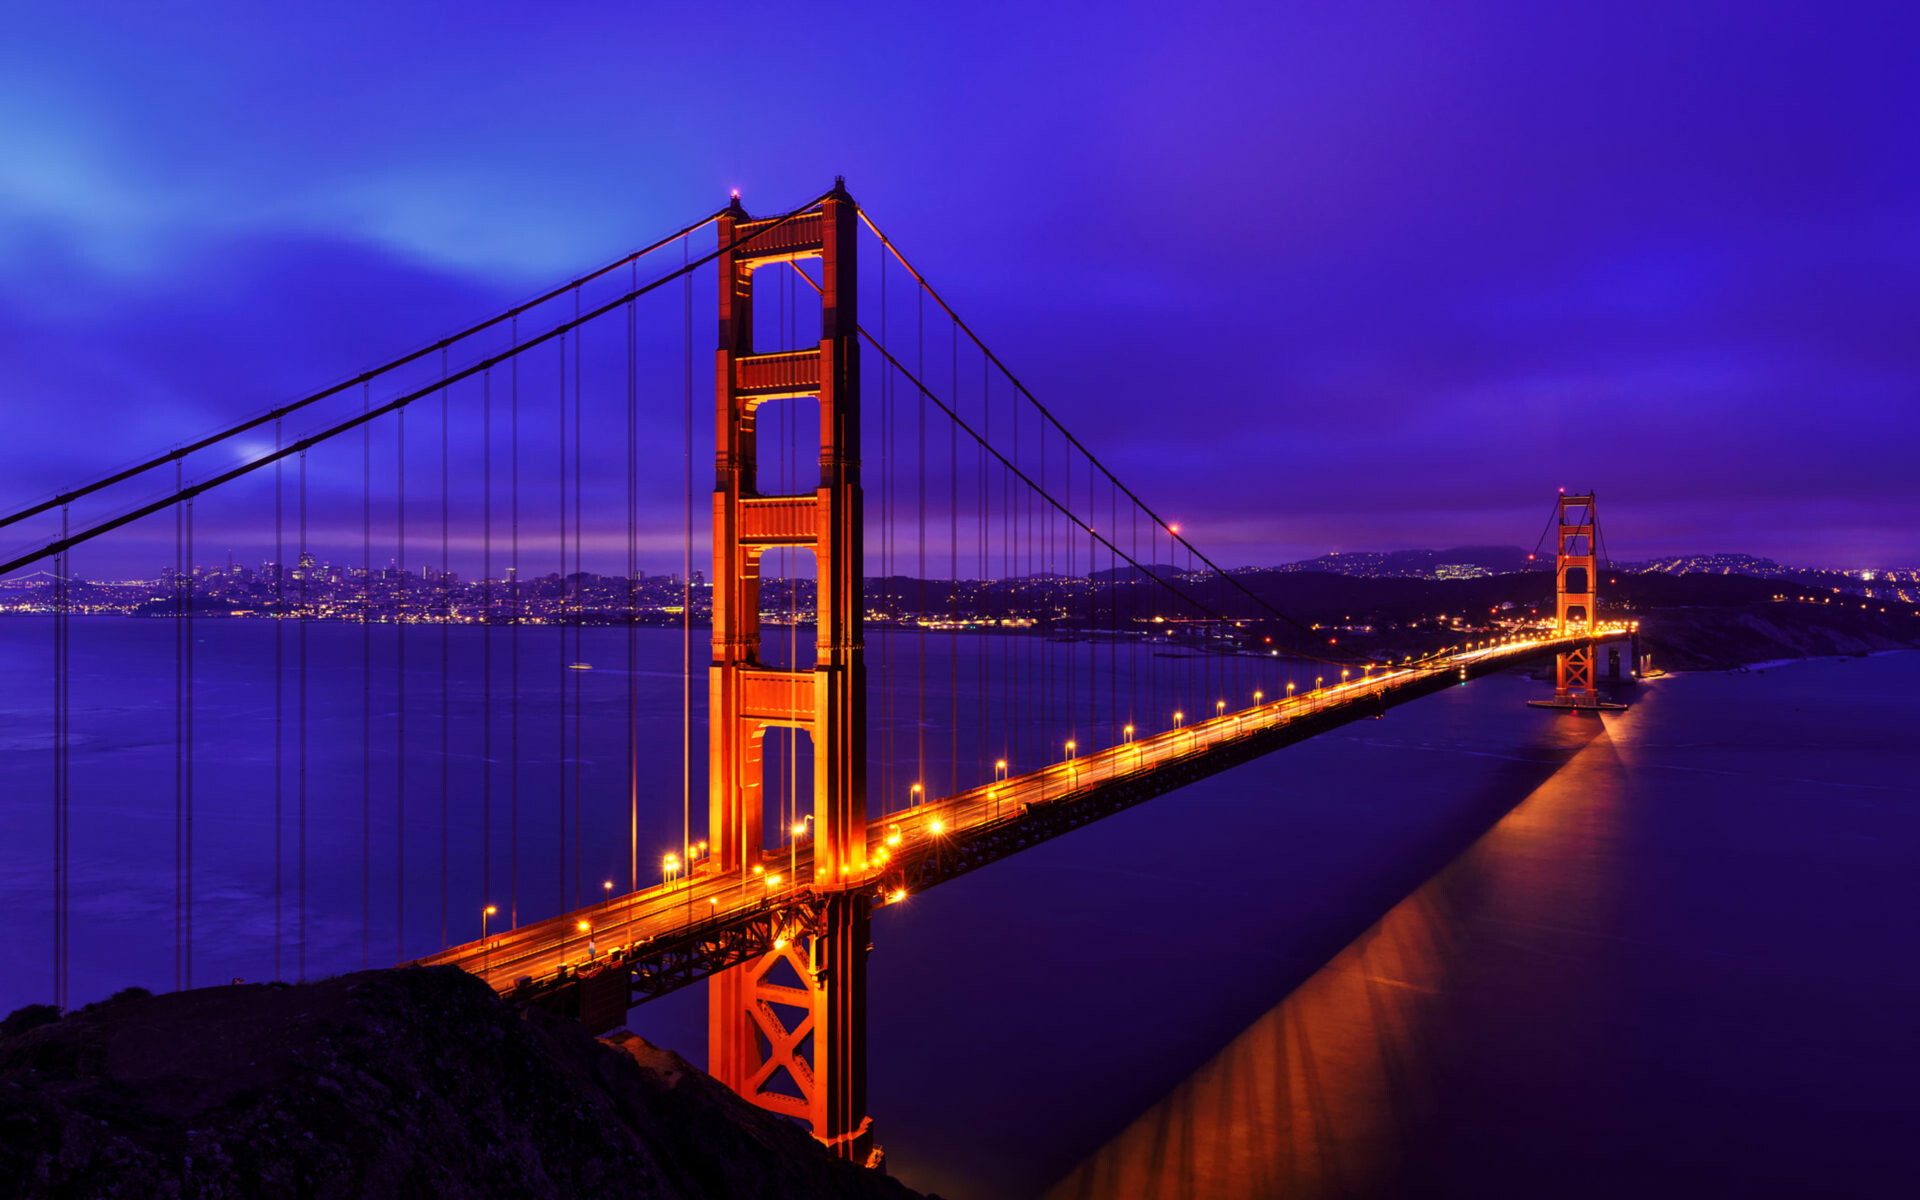 United States: Golden Gate Bridge, Night view, Suspension bridge, San Francisco, California, US. 1920x1200 HD Wallpaper.